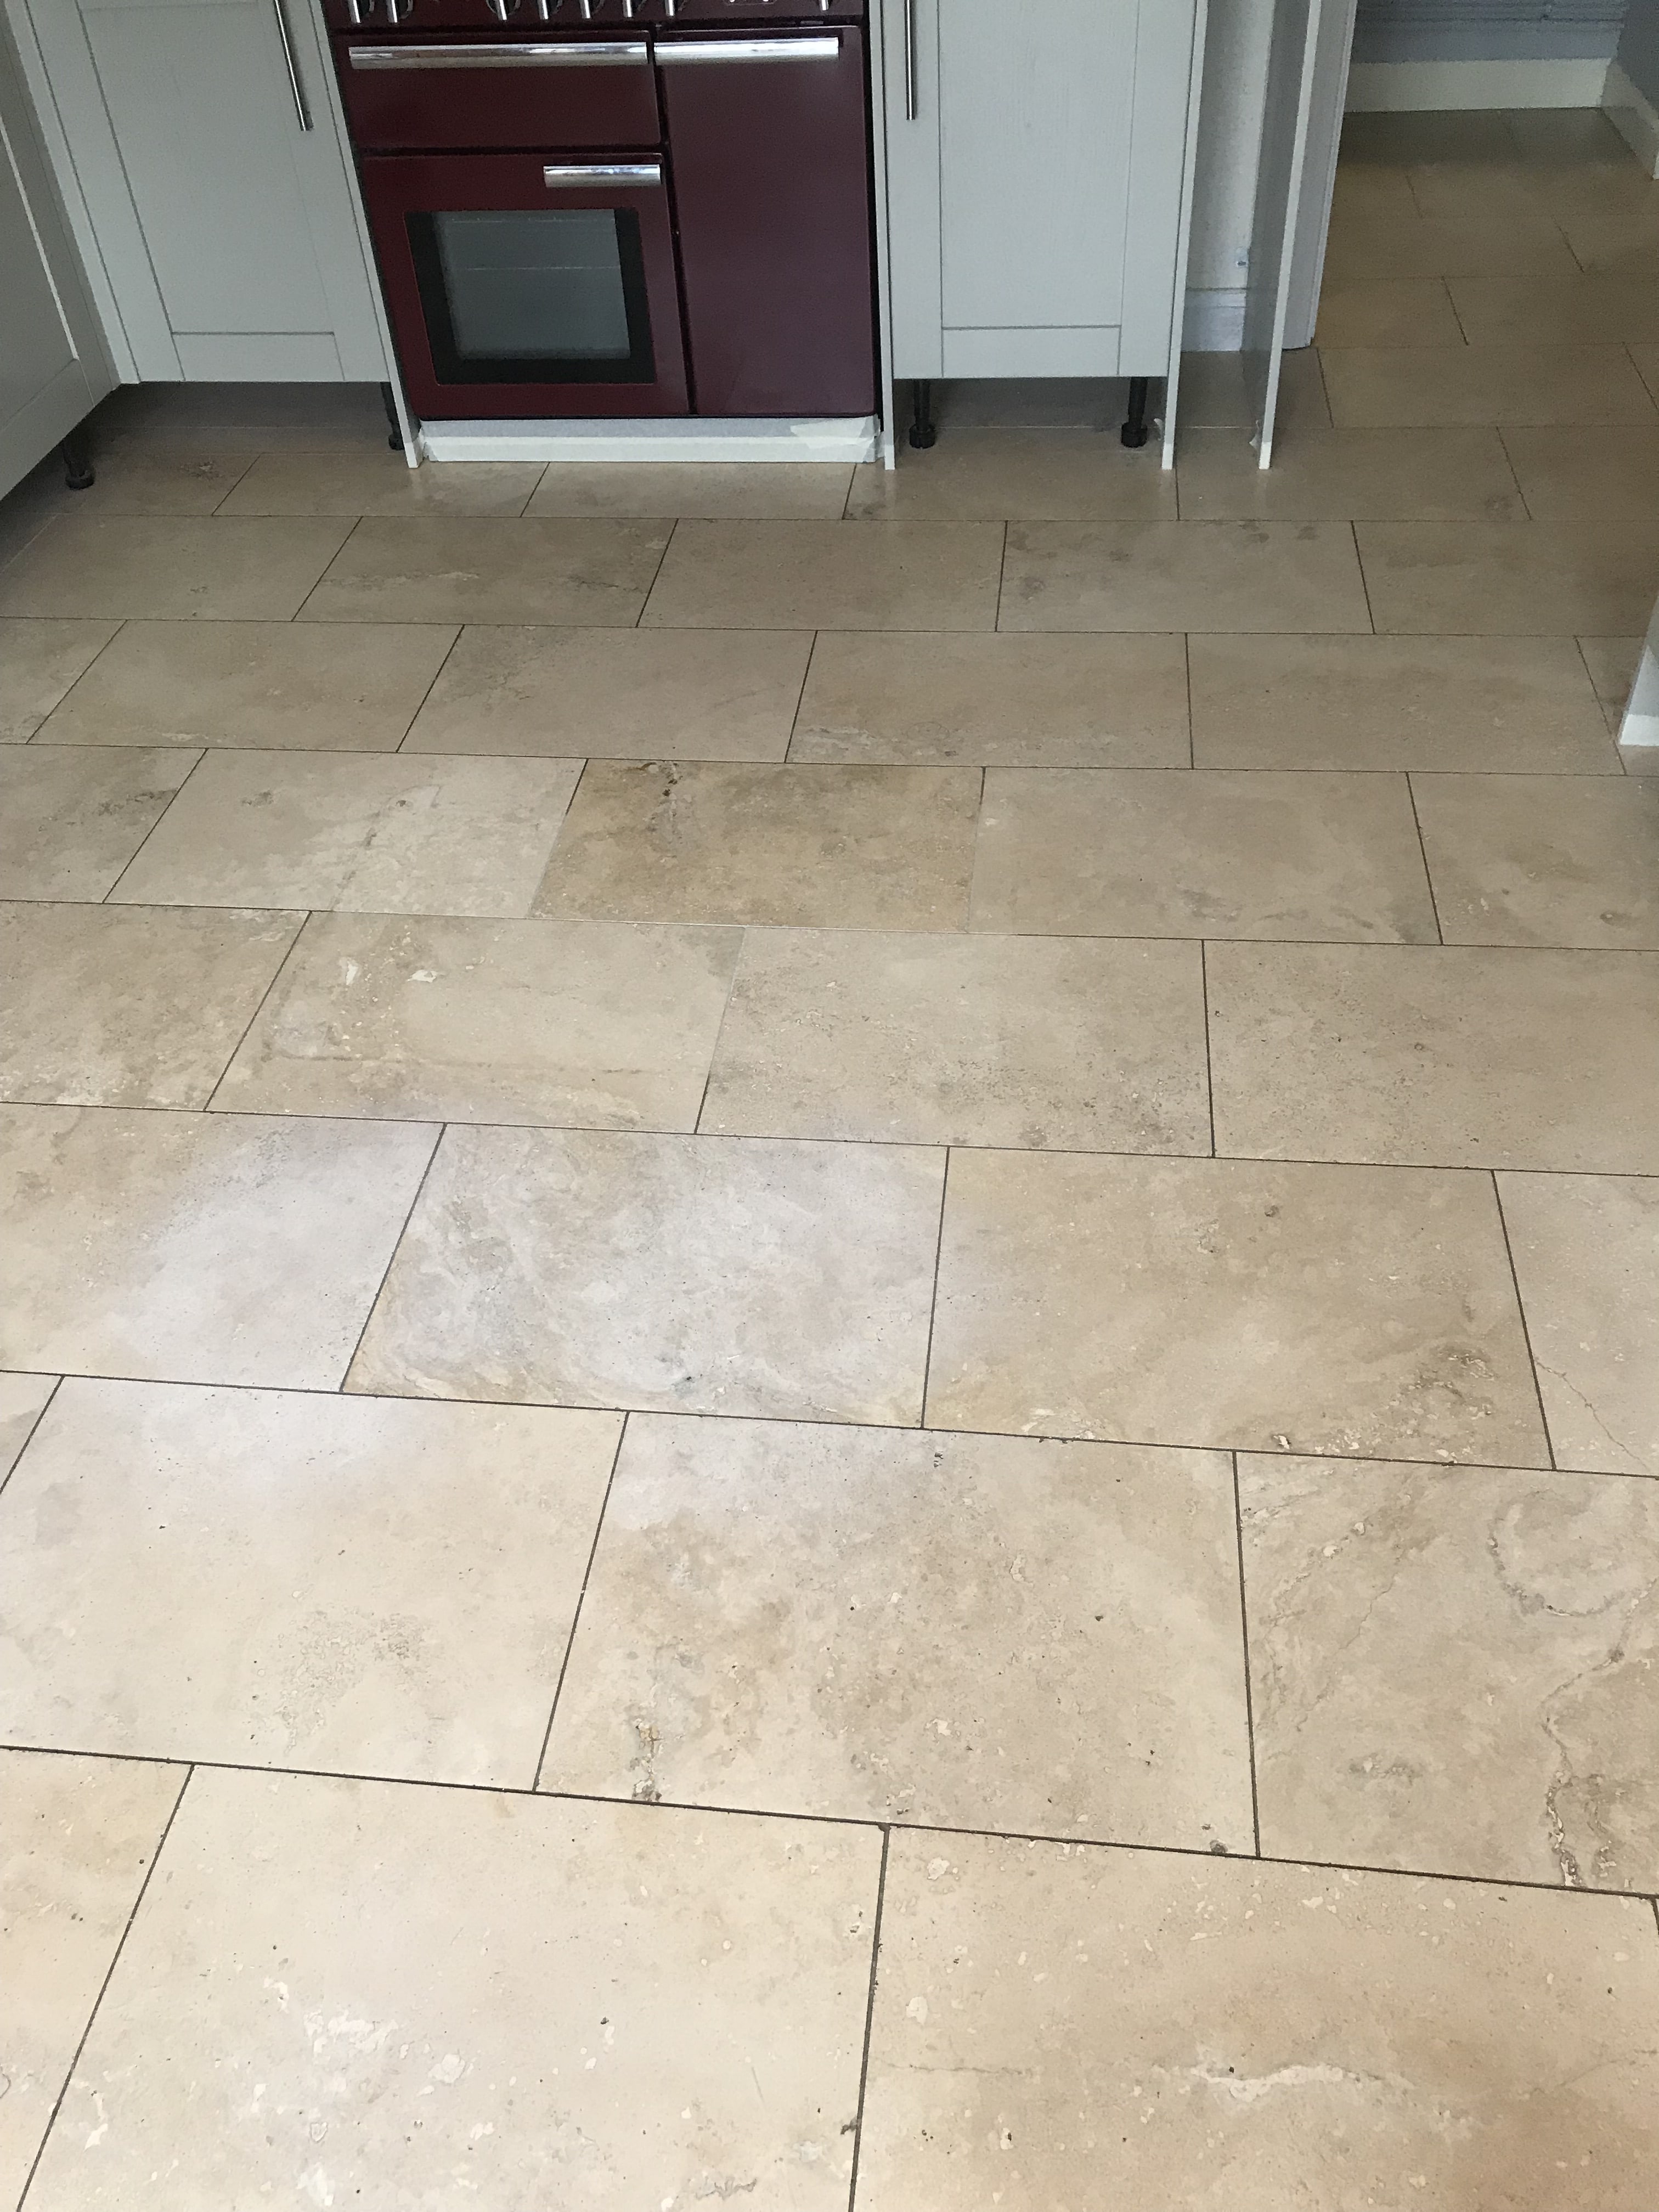 Travertine Kitchen Floor Tiles Before Cleaning Stoke-on-Trent